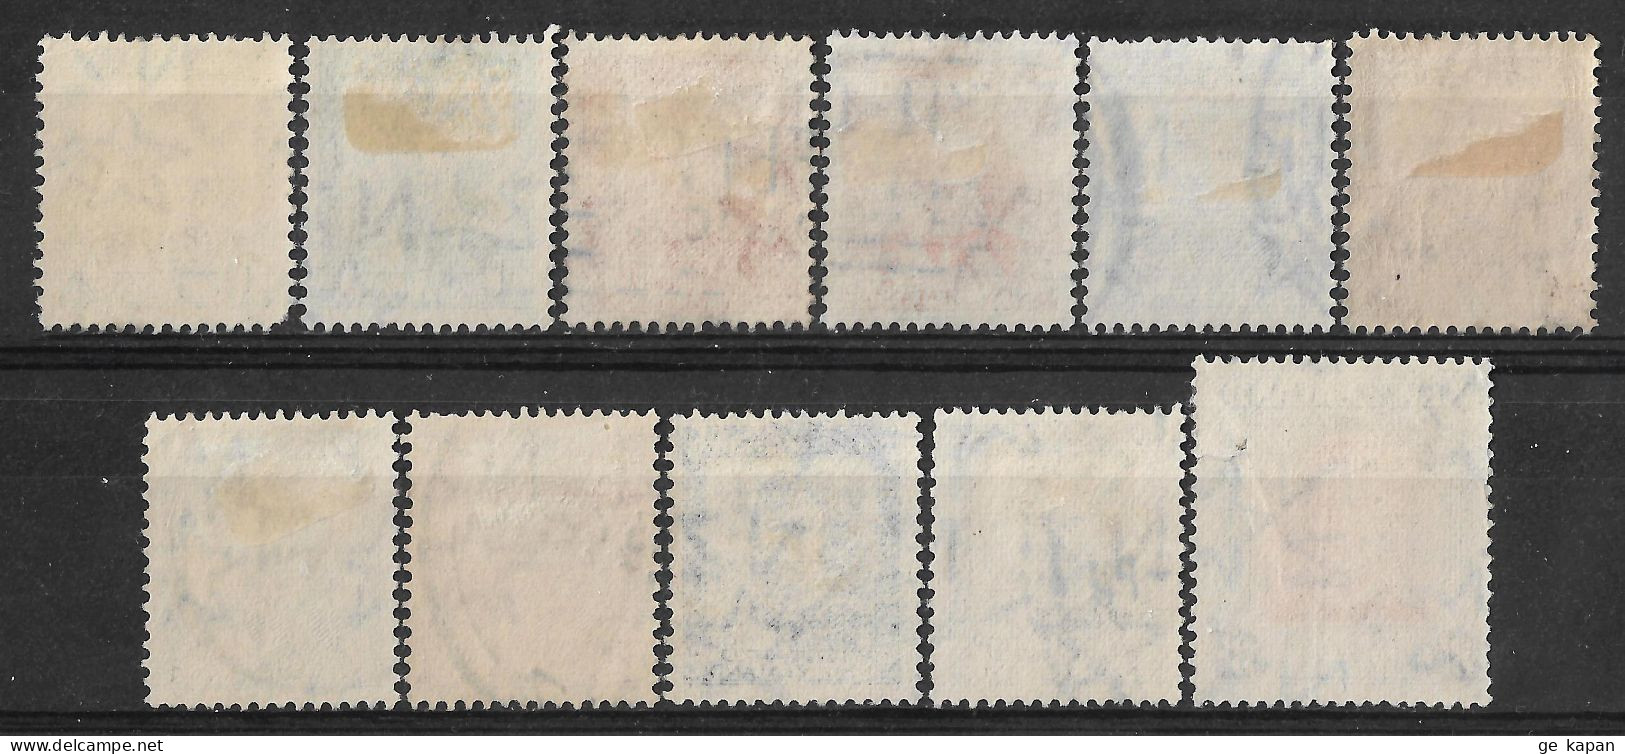 1938-1947 NEW ZEALAND Set Of 11 Used Stamps (Scott # 227A,228B,228C,258,260-264,268) CV $4.40 - Gebruikt